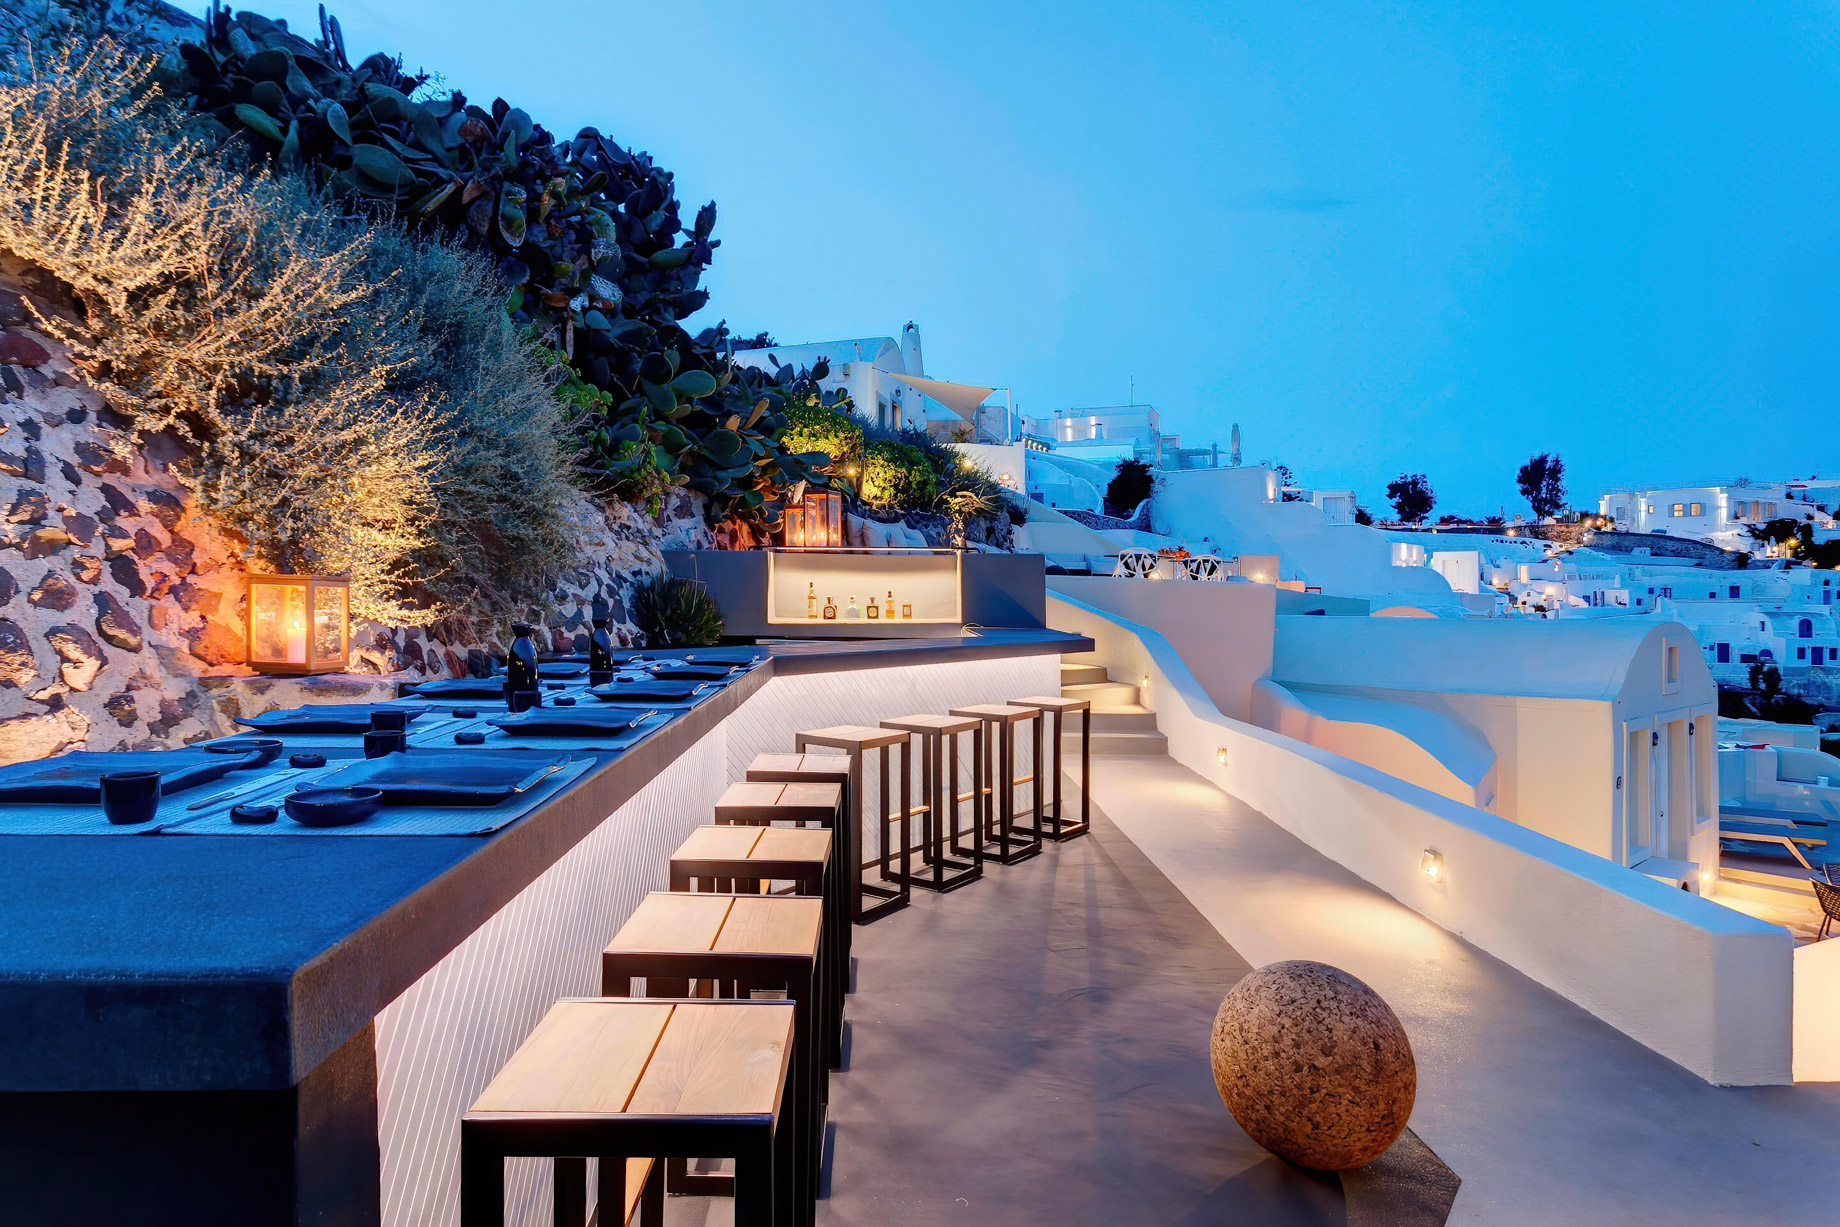 Mystique Hotel Santorini – Oia, Santorini Island, Greece – Cliffside ASEA Restaurant and Cocktail Bar